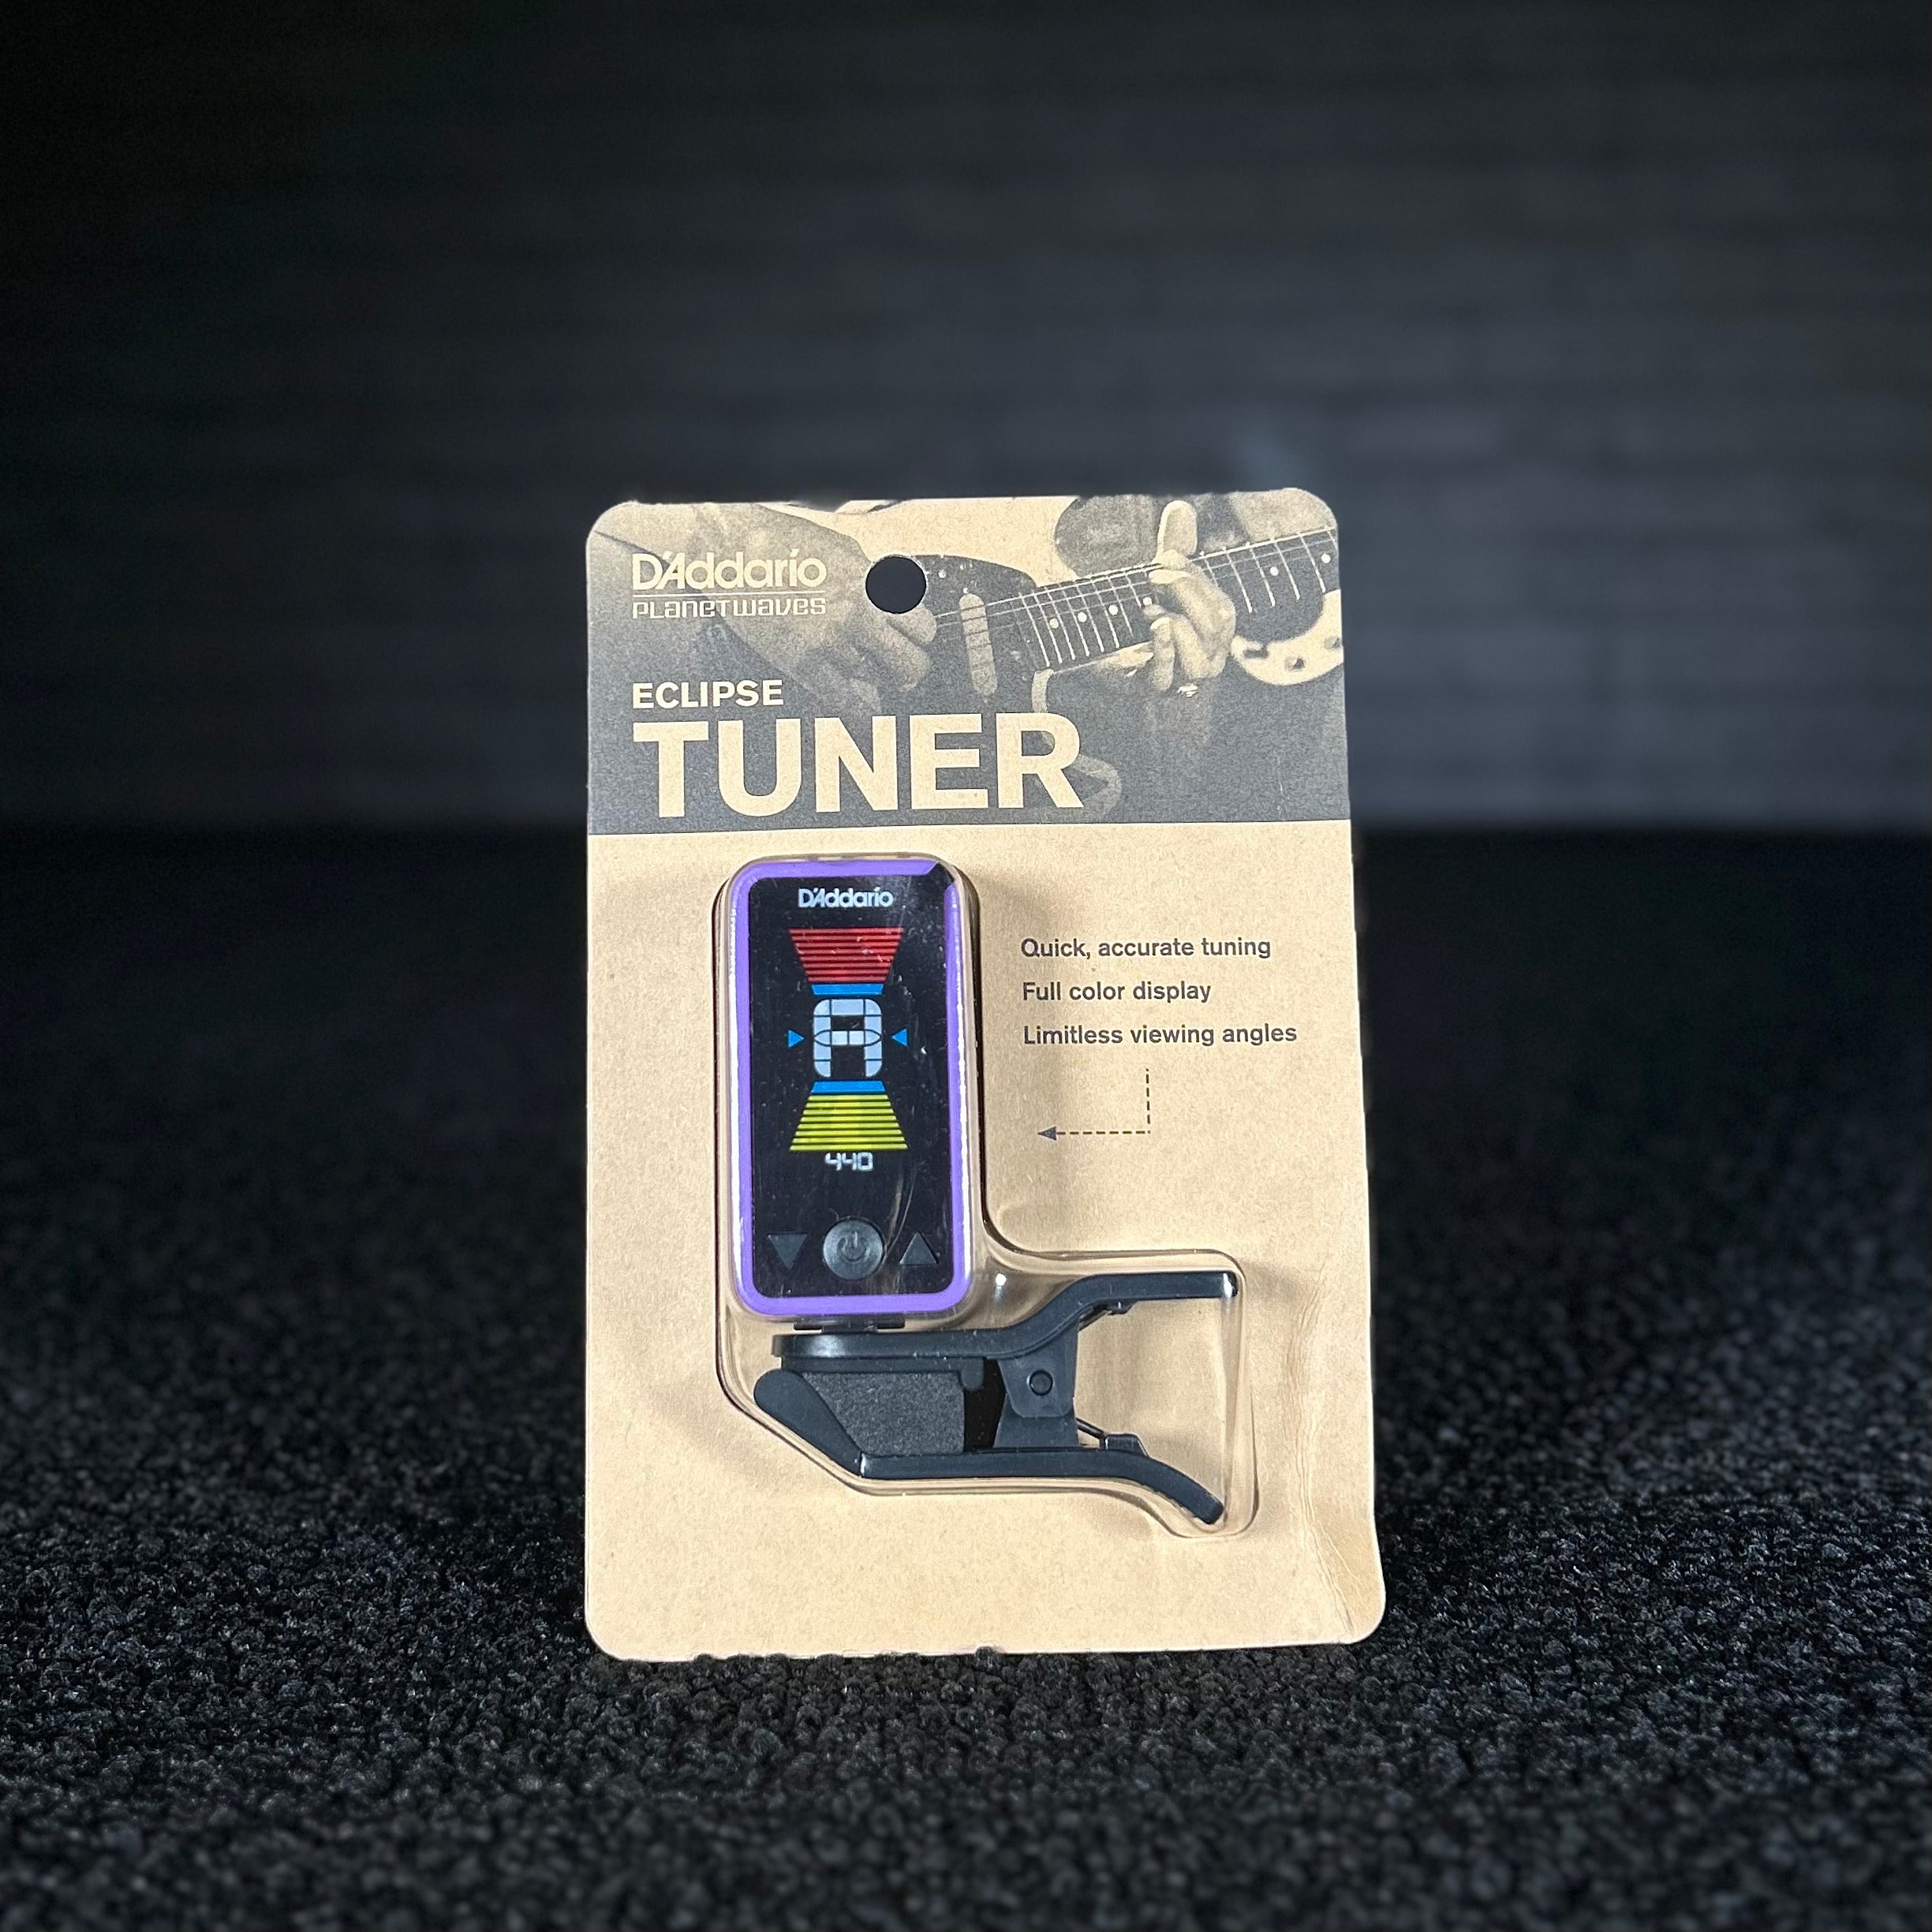 D'addario Eclipse Tuner (Purple)